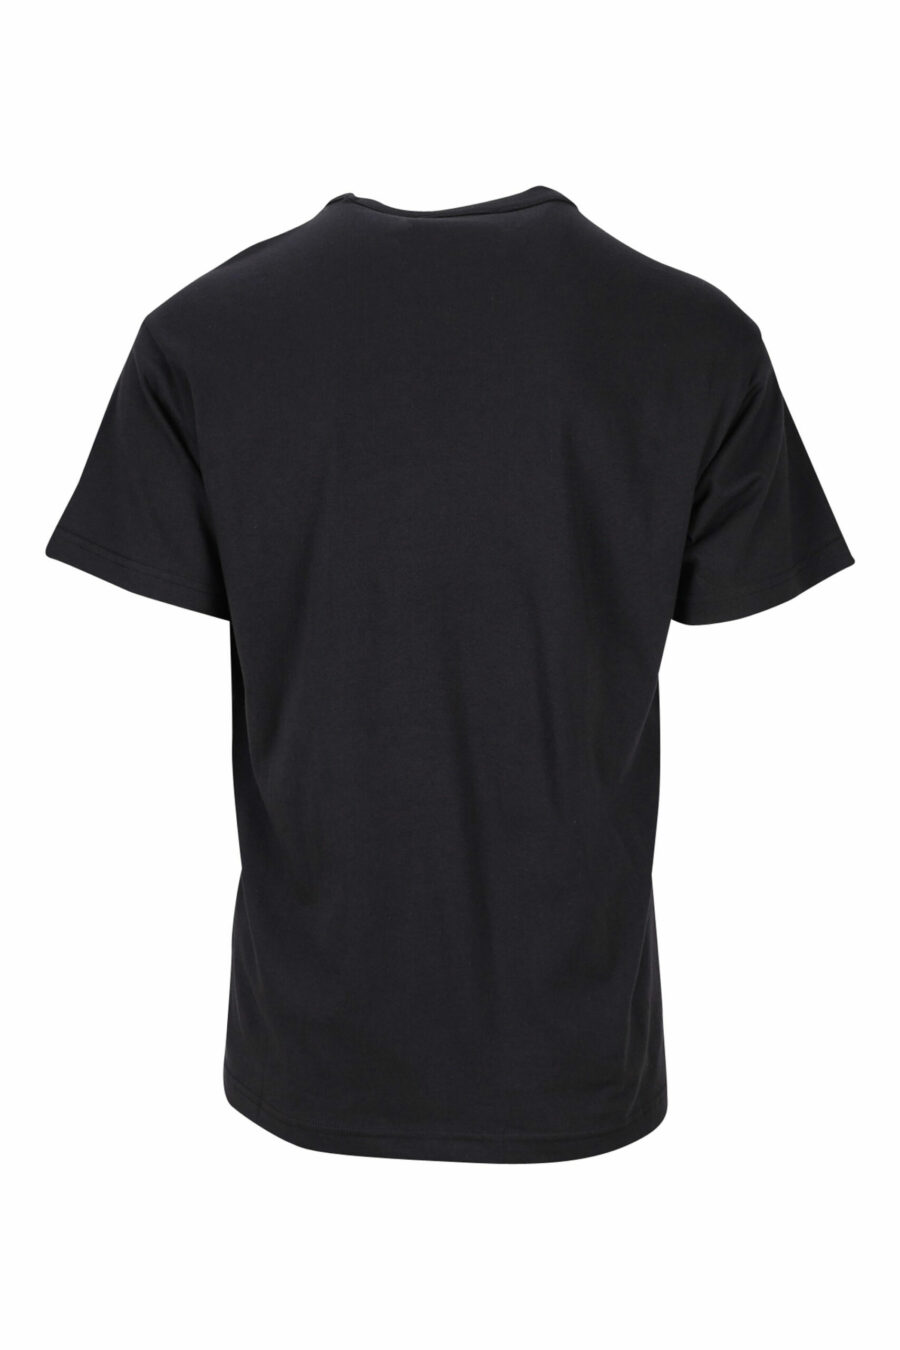 Camiseta negra con maxilogo "piece number" monocromático - 8052019468755 1 scaled